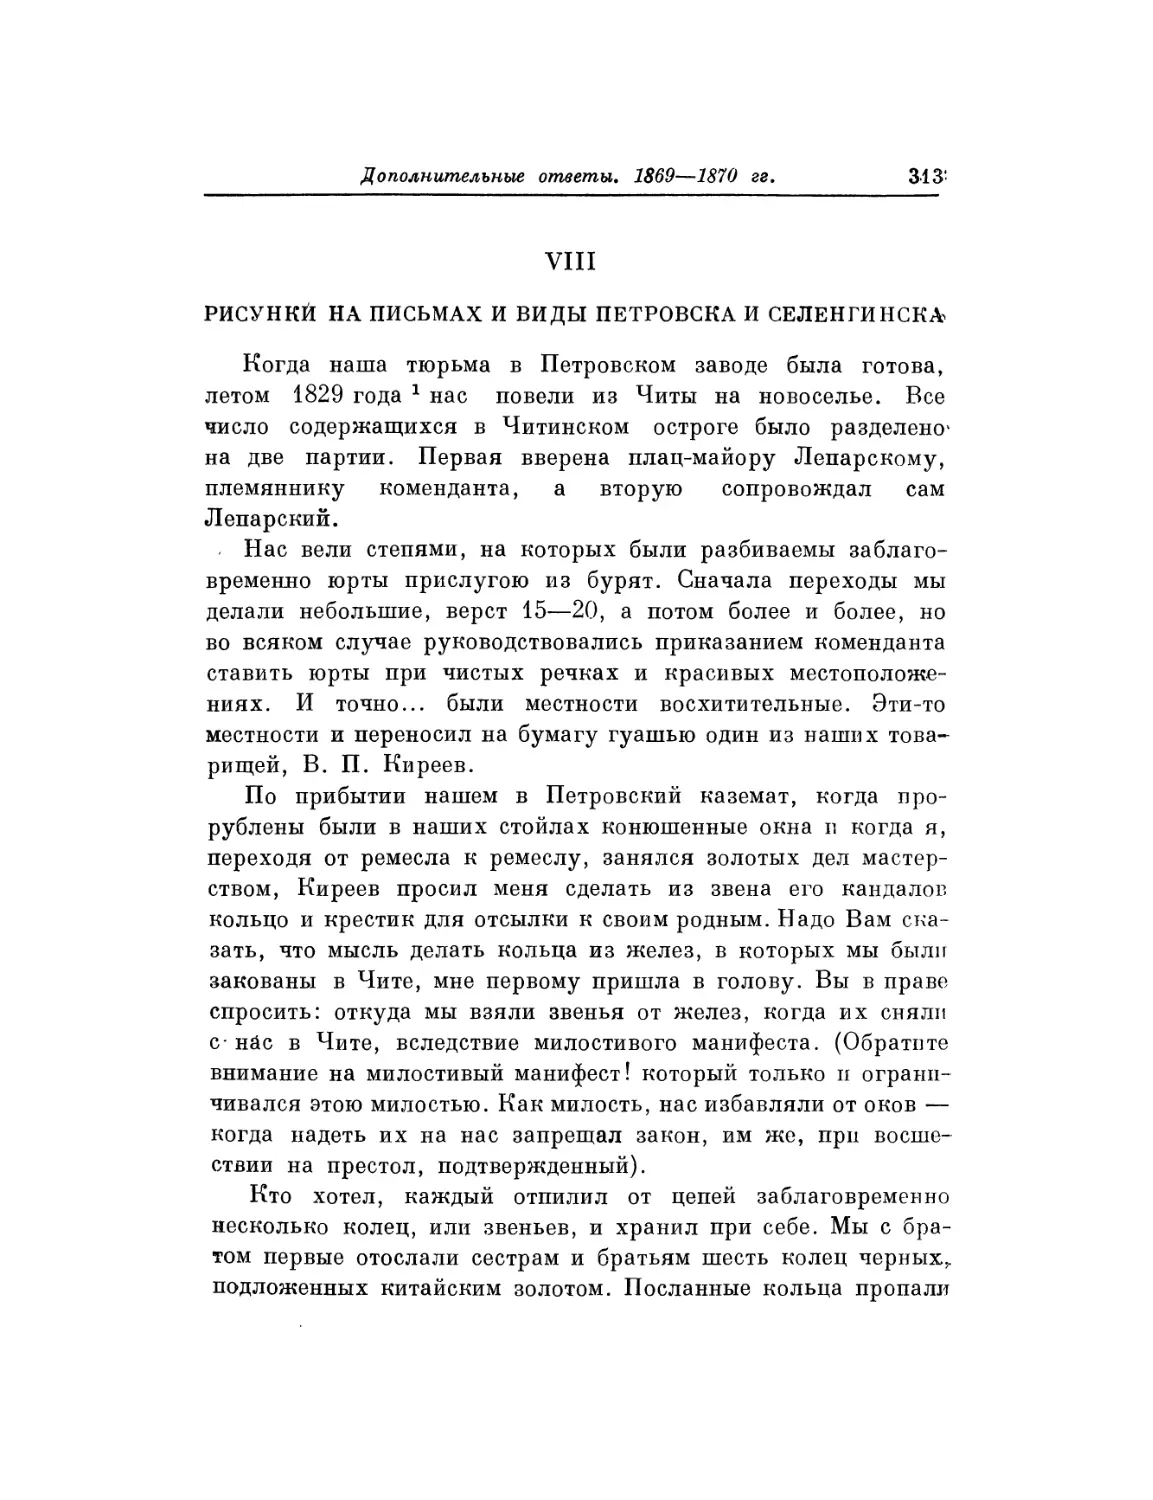 VIII. Рисунки на письмах и виды Петровска и Селенгинска